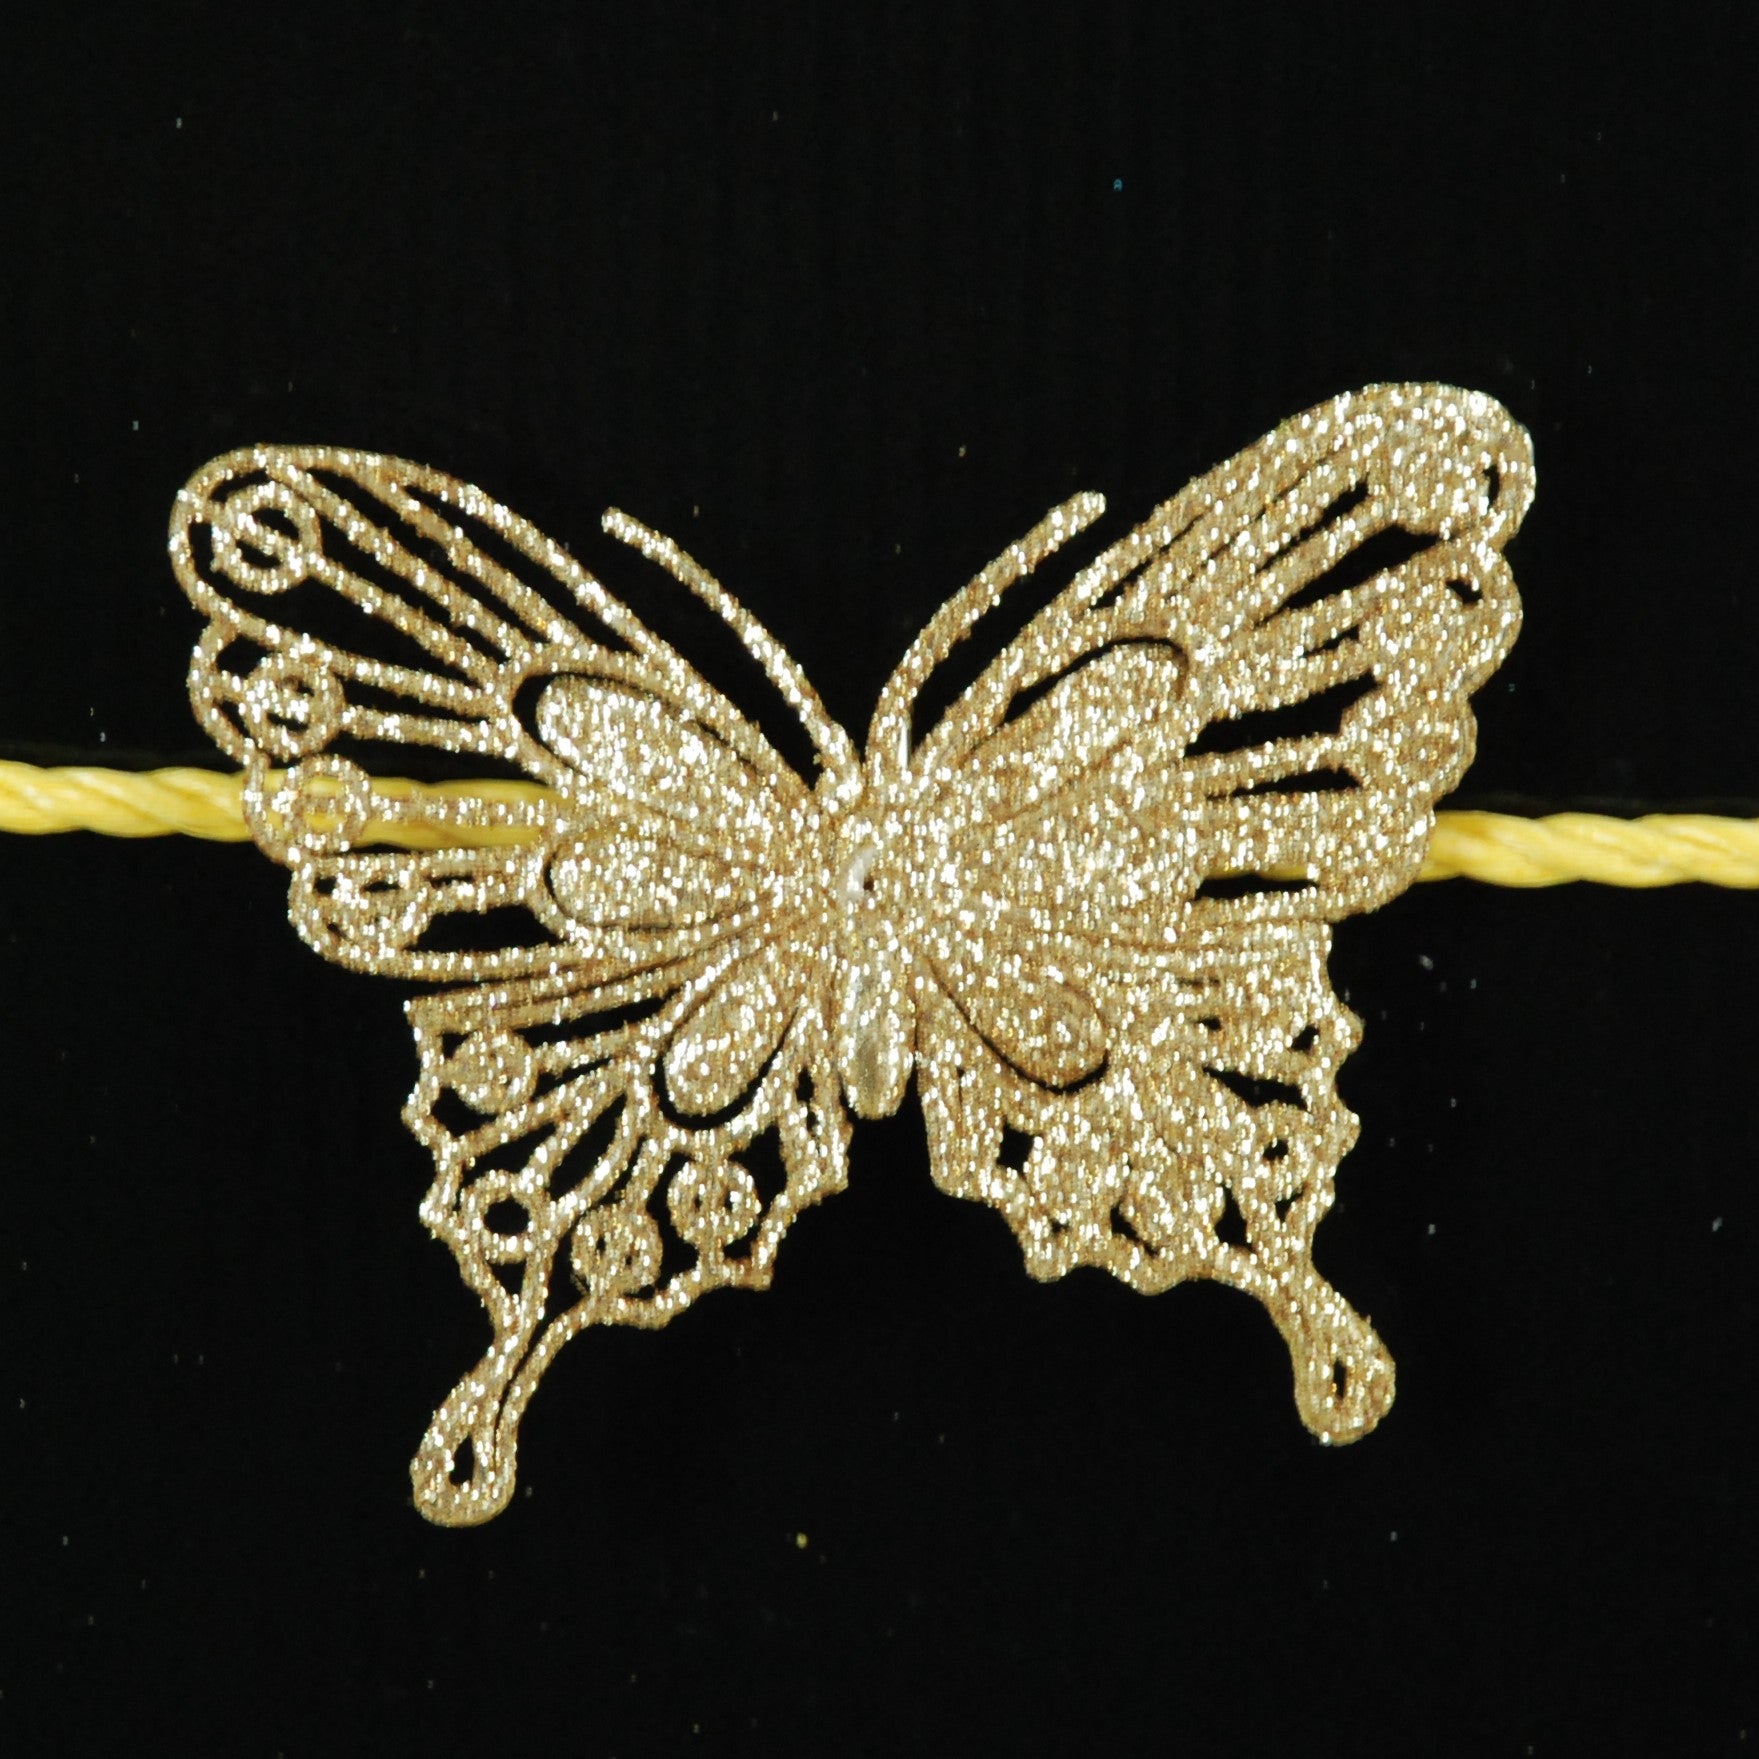 Set of 3, 10cm Wide Christmas Decoration Glitter Butterflies/ Butterfly Clips - Antique Gold